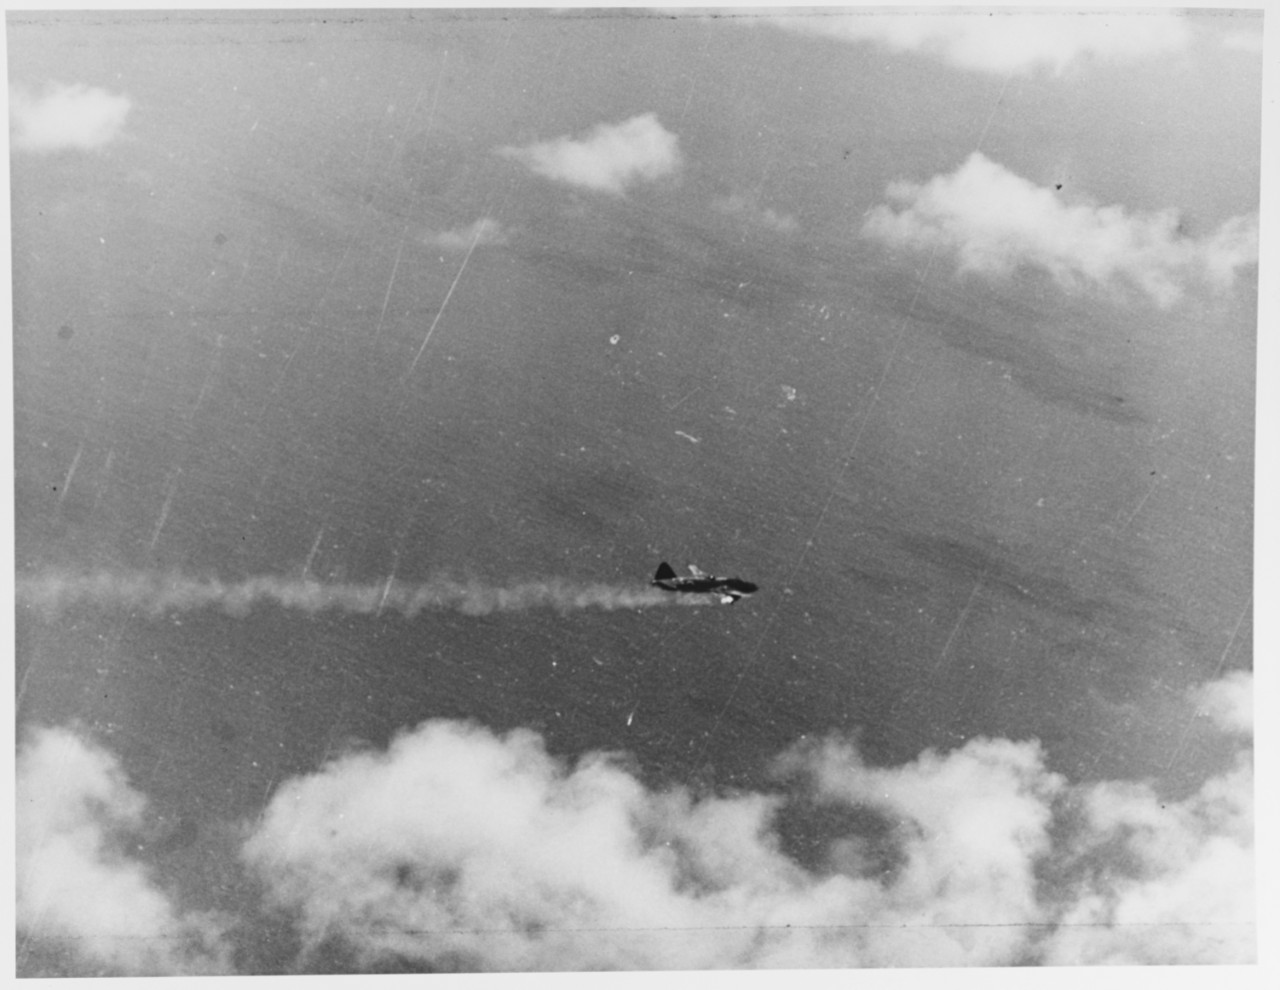 Japanese Navy G4M "Betty" Bomber